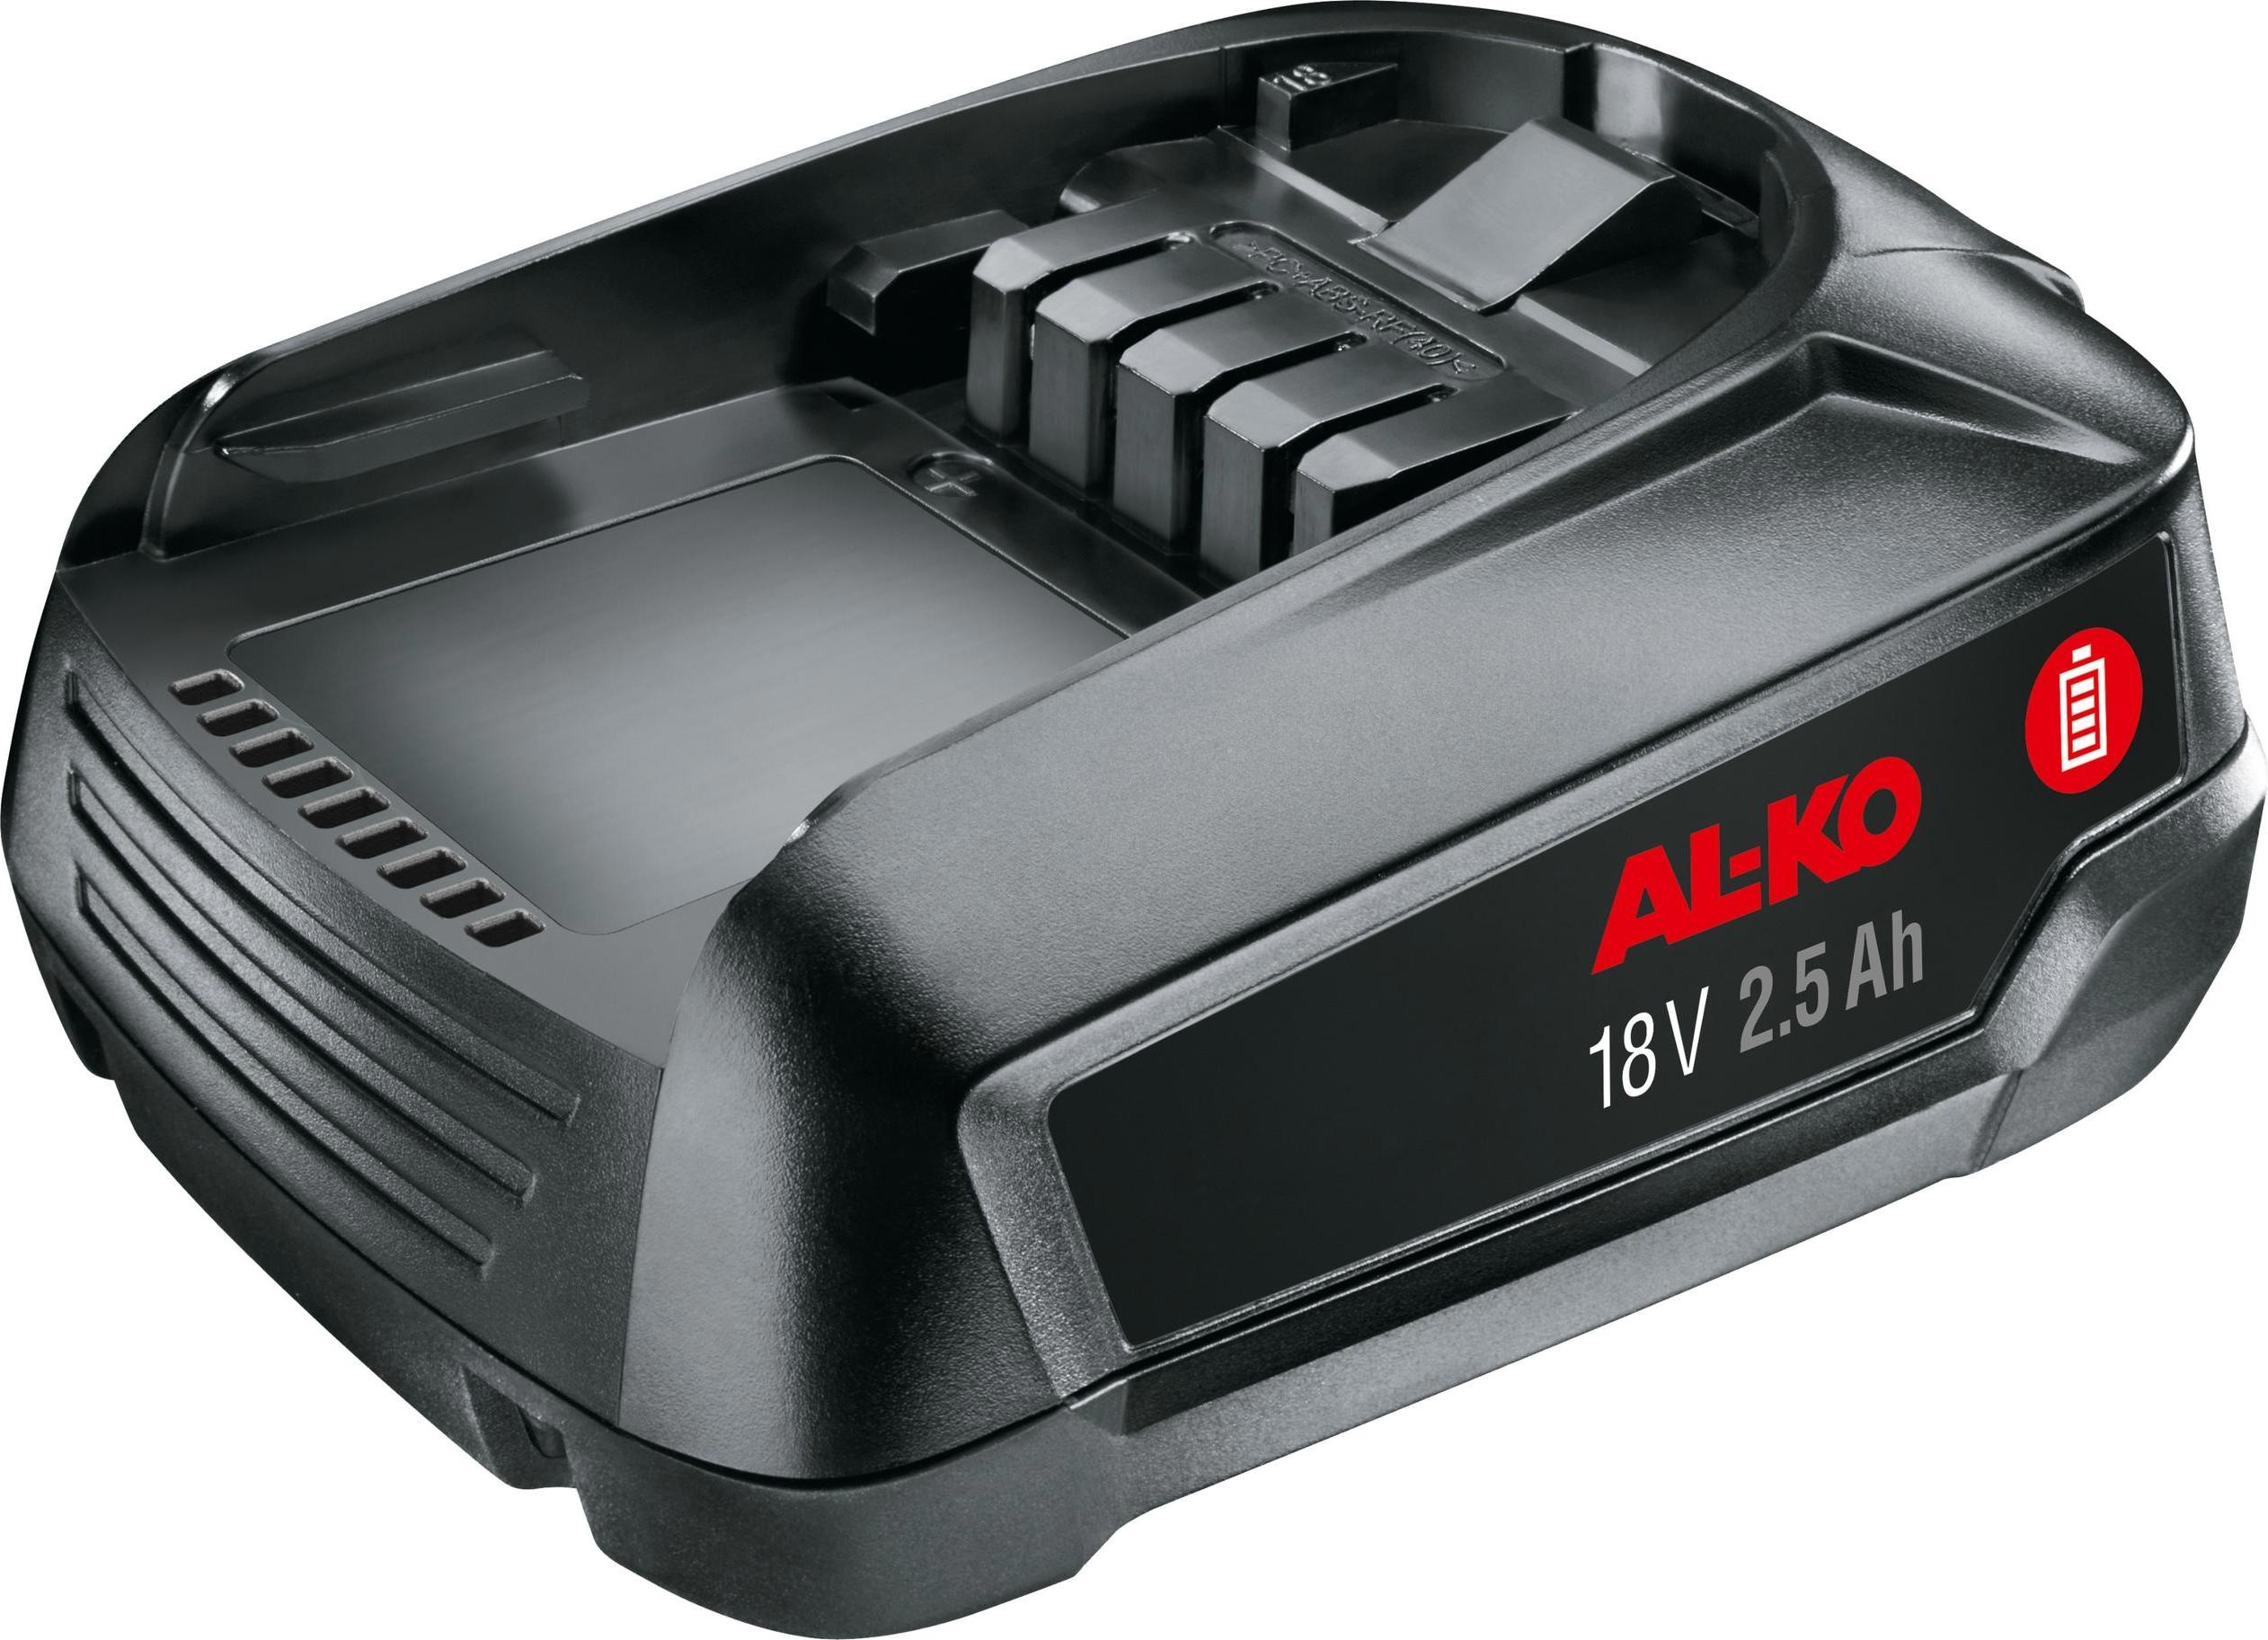 AL-KO, Werkzeugakku + Ladegerät, 18 V Bosch Home And Garden Compatible Akku B50 Li,18 V2,5 Ah (18 V)